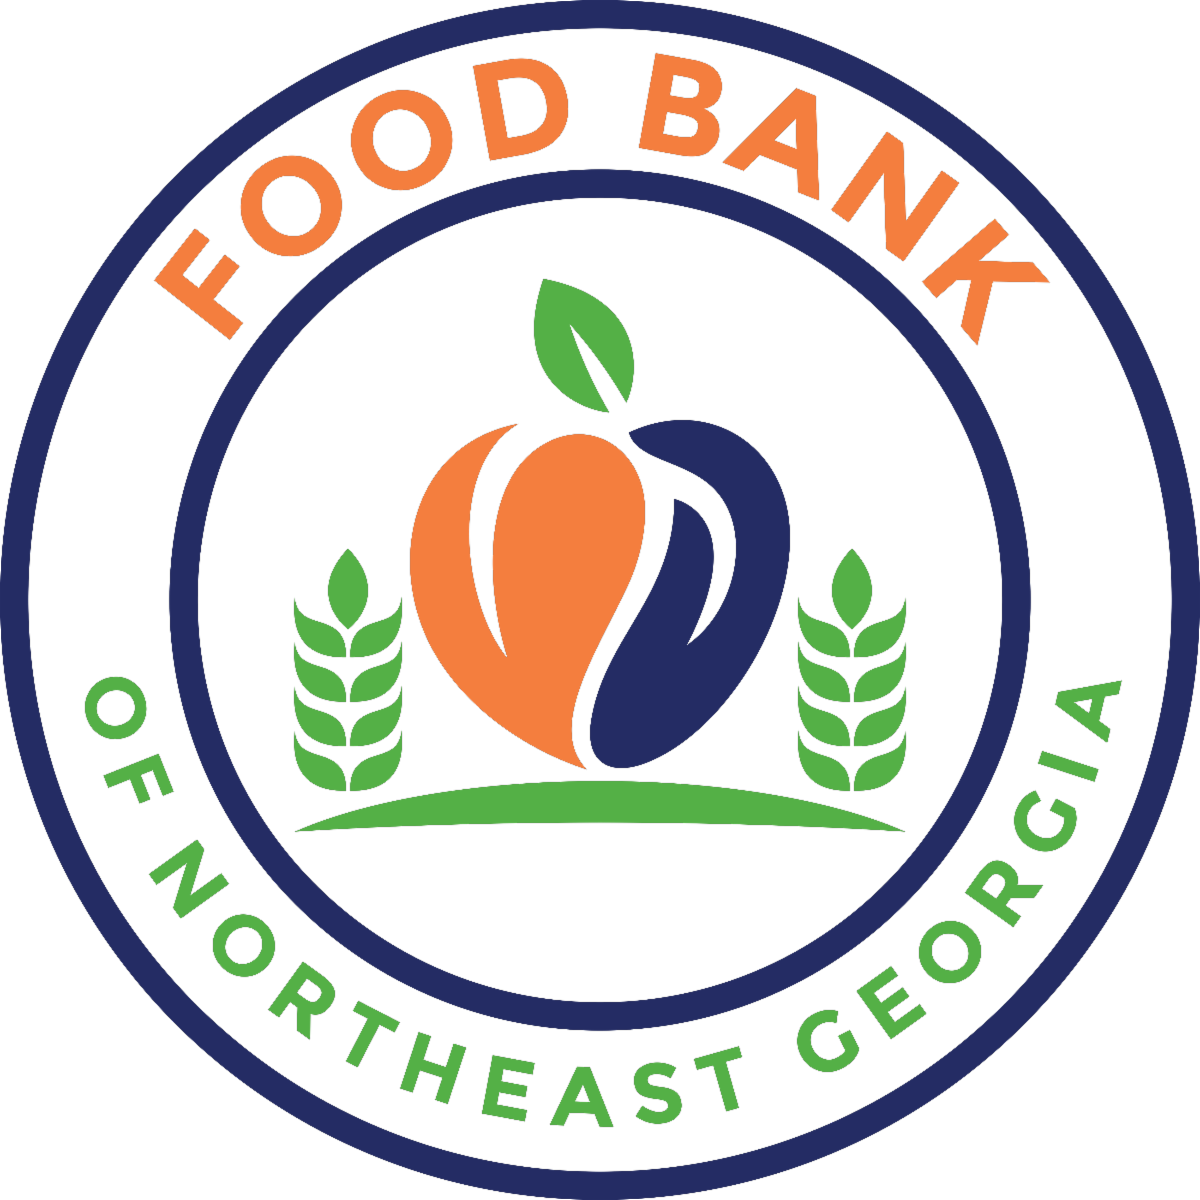 Foodbank of Northeast Georgia - Community Partner - ARC